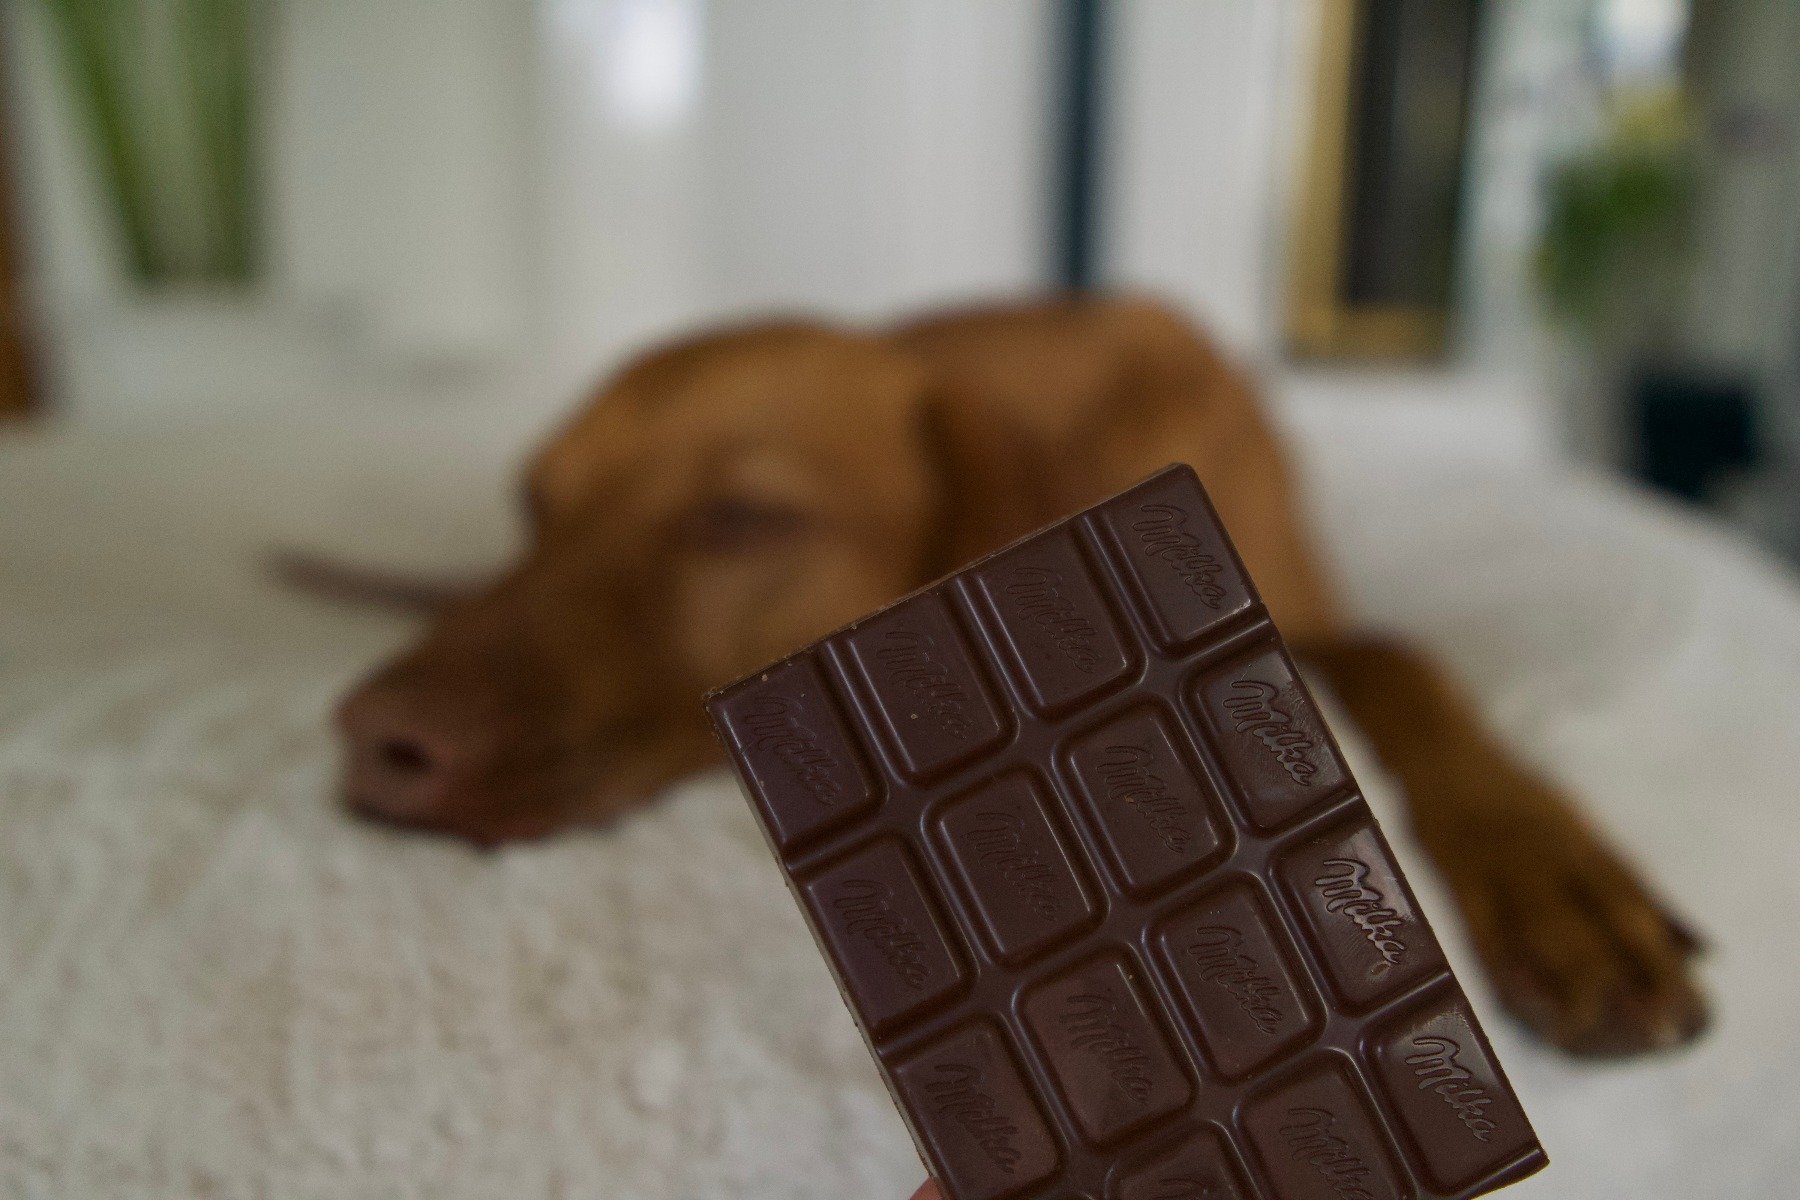 Schokolade ist giftig für Hunde